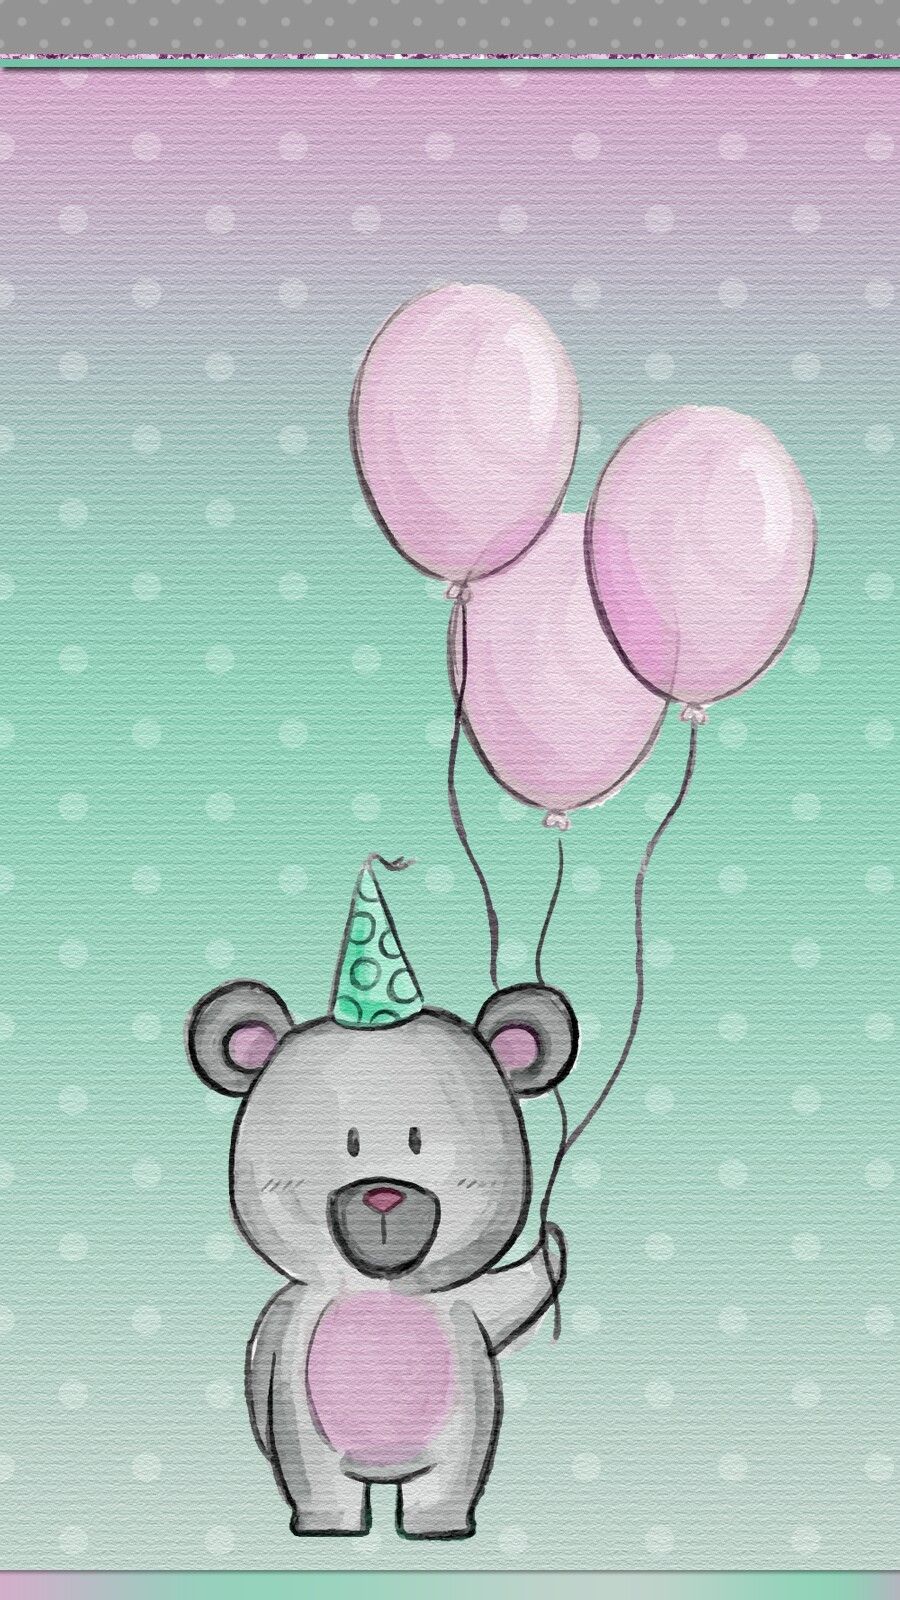 HappY birthday to me!. Birthday wallpaper, iPhone wallpaper, Bear wallpaper